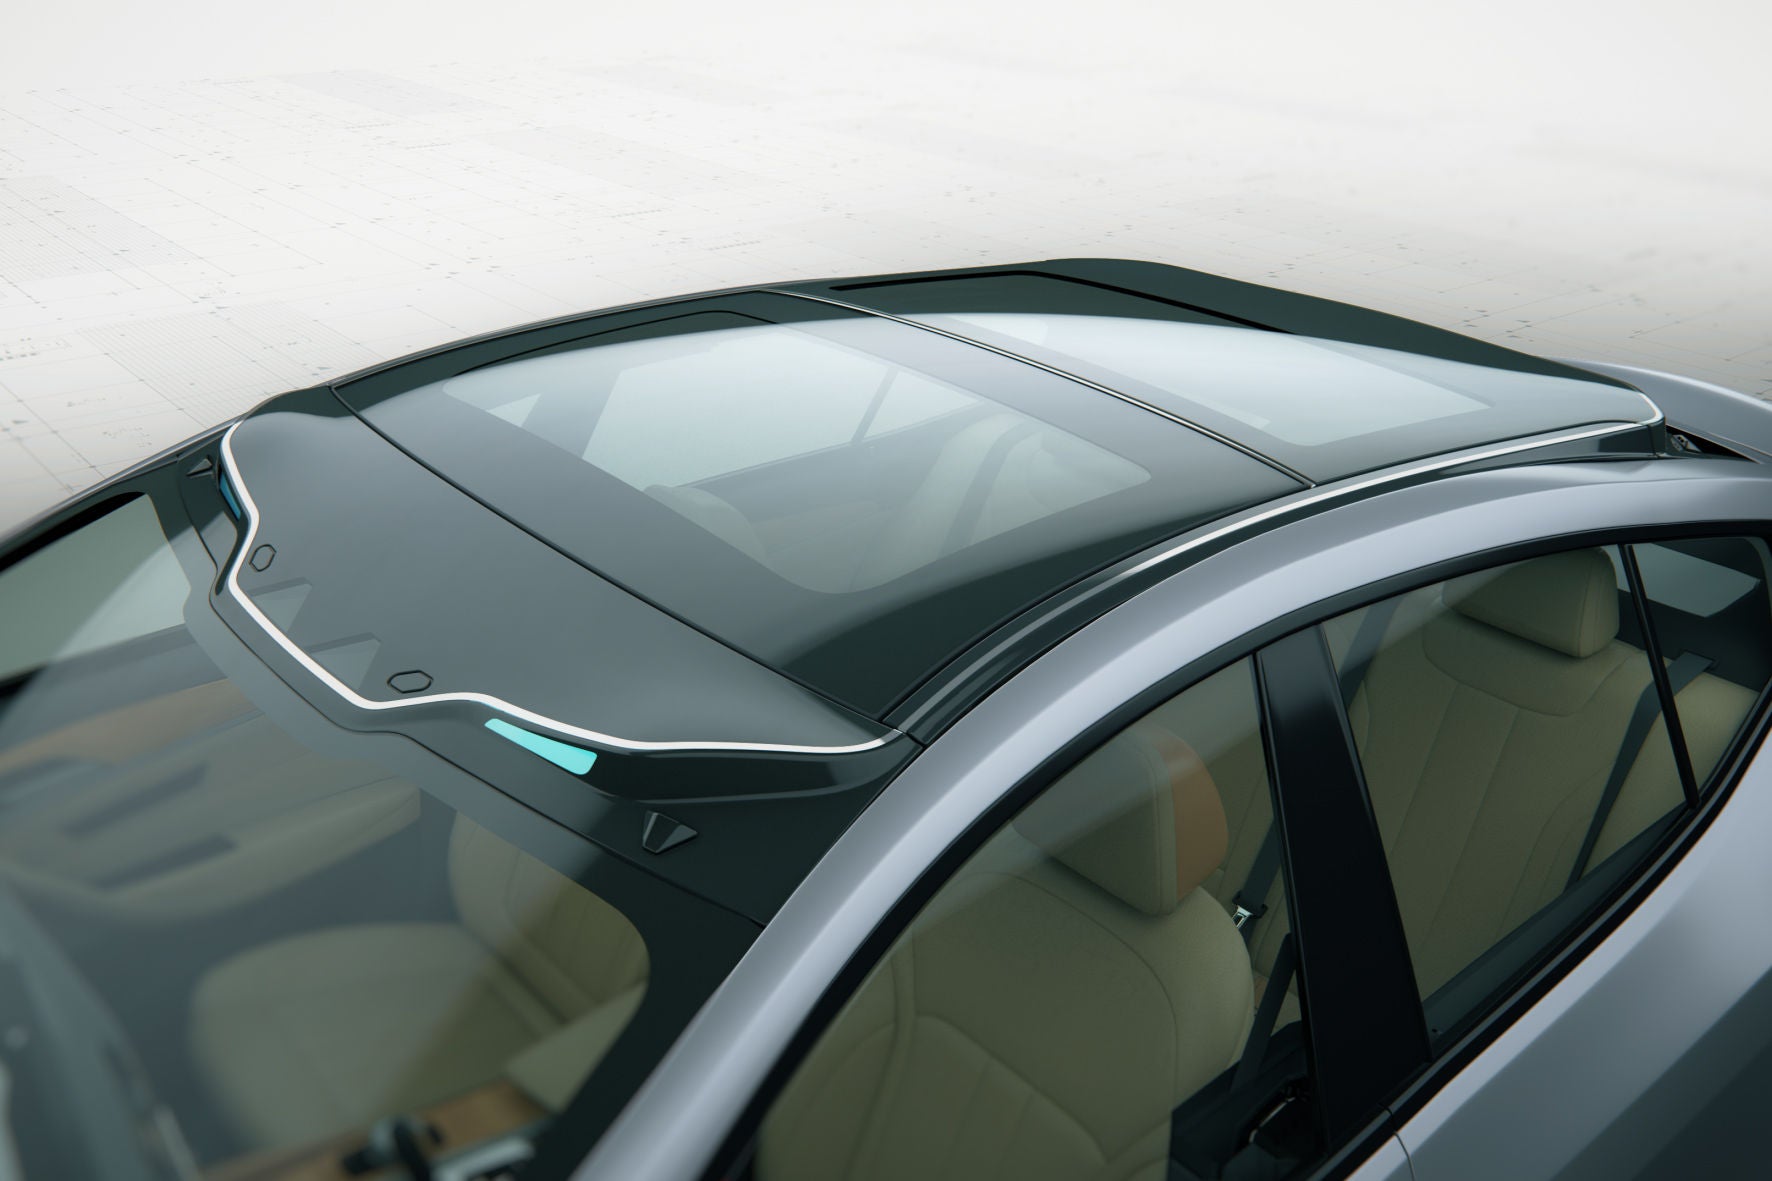 Sensor set for autonomous driving in car roof